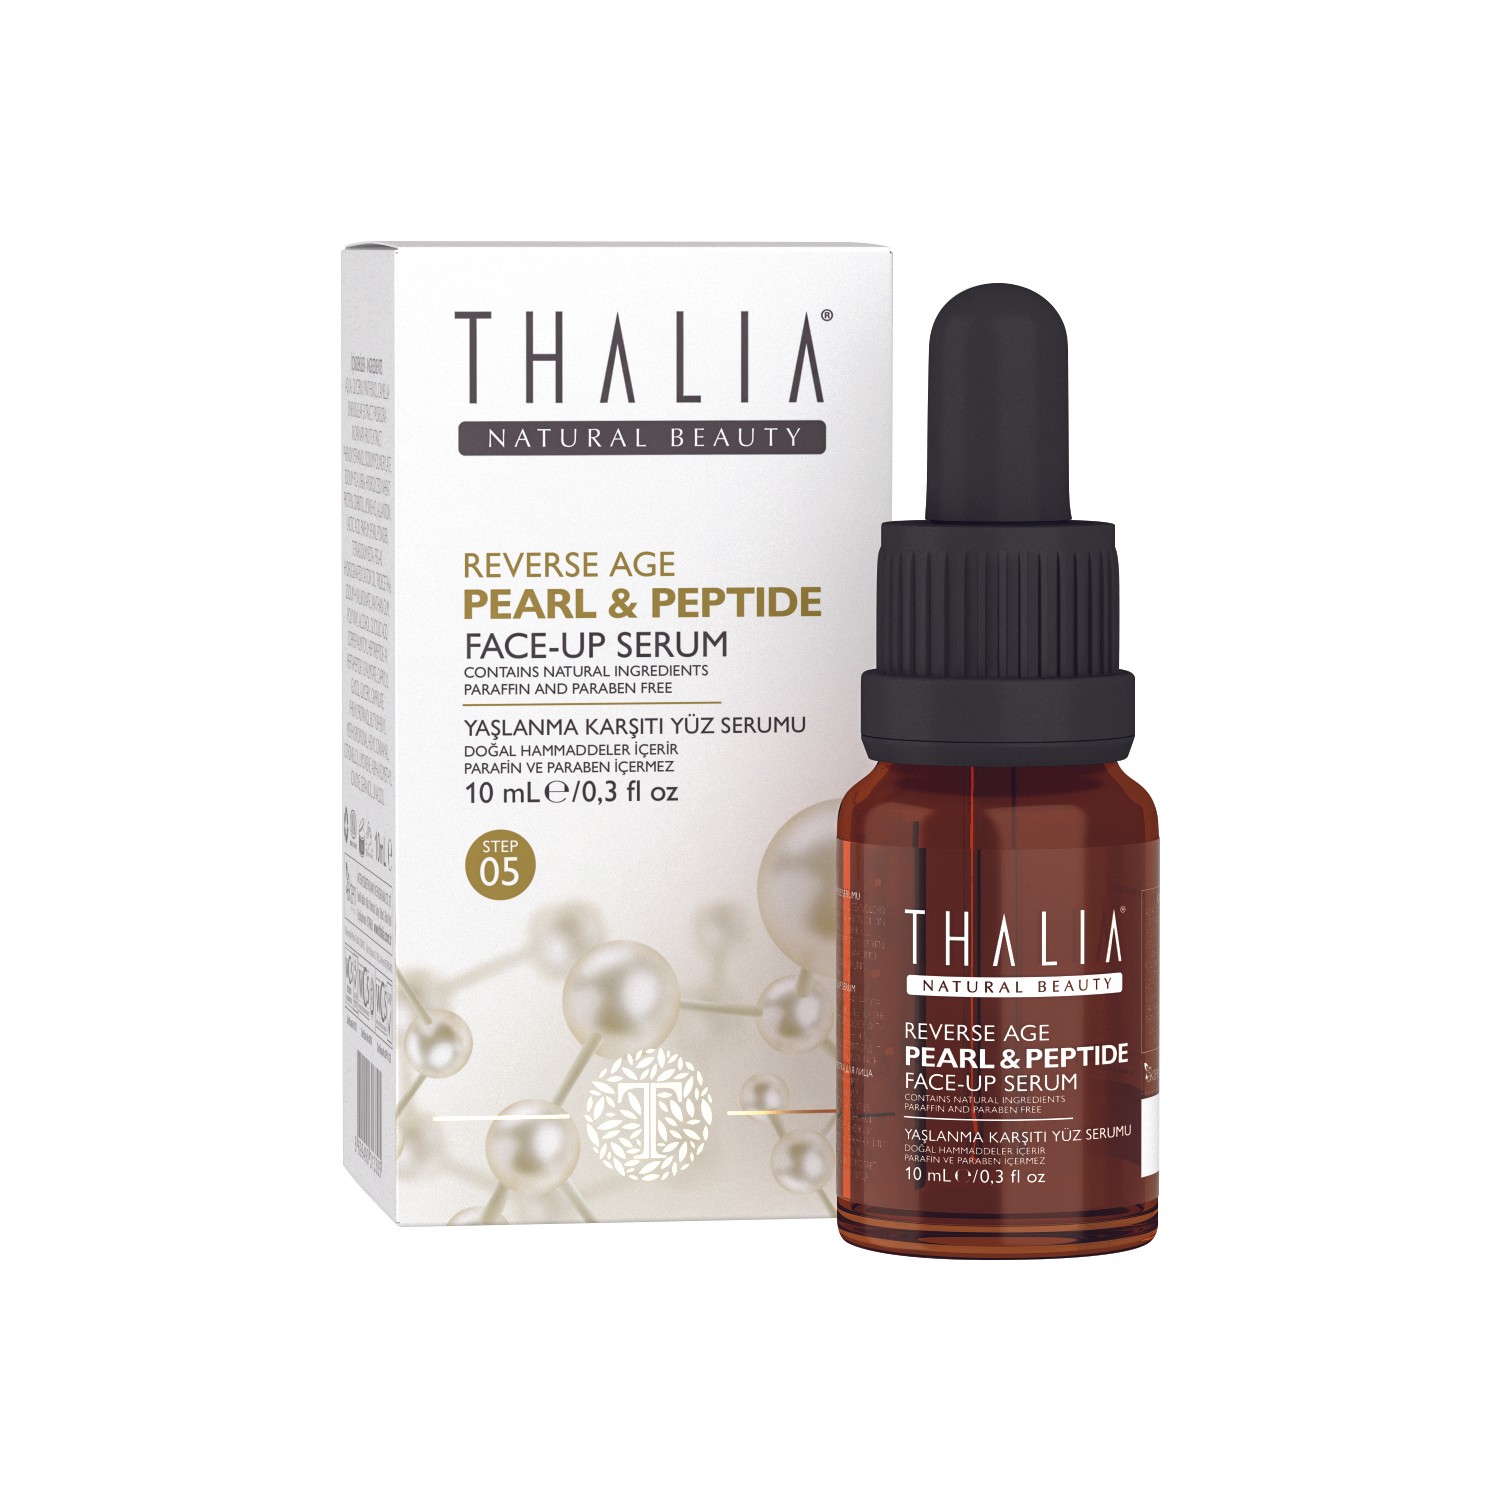 Омолаживающая сыворотка для лица Thalia Pearl & Peptide 40+, 10 мл пенка антивозрастная для лица thalia natural beauty reverse age pearl